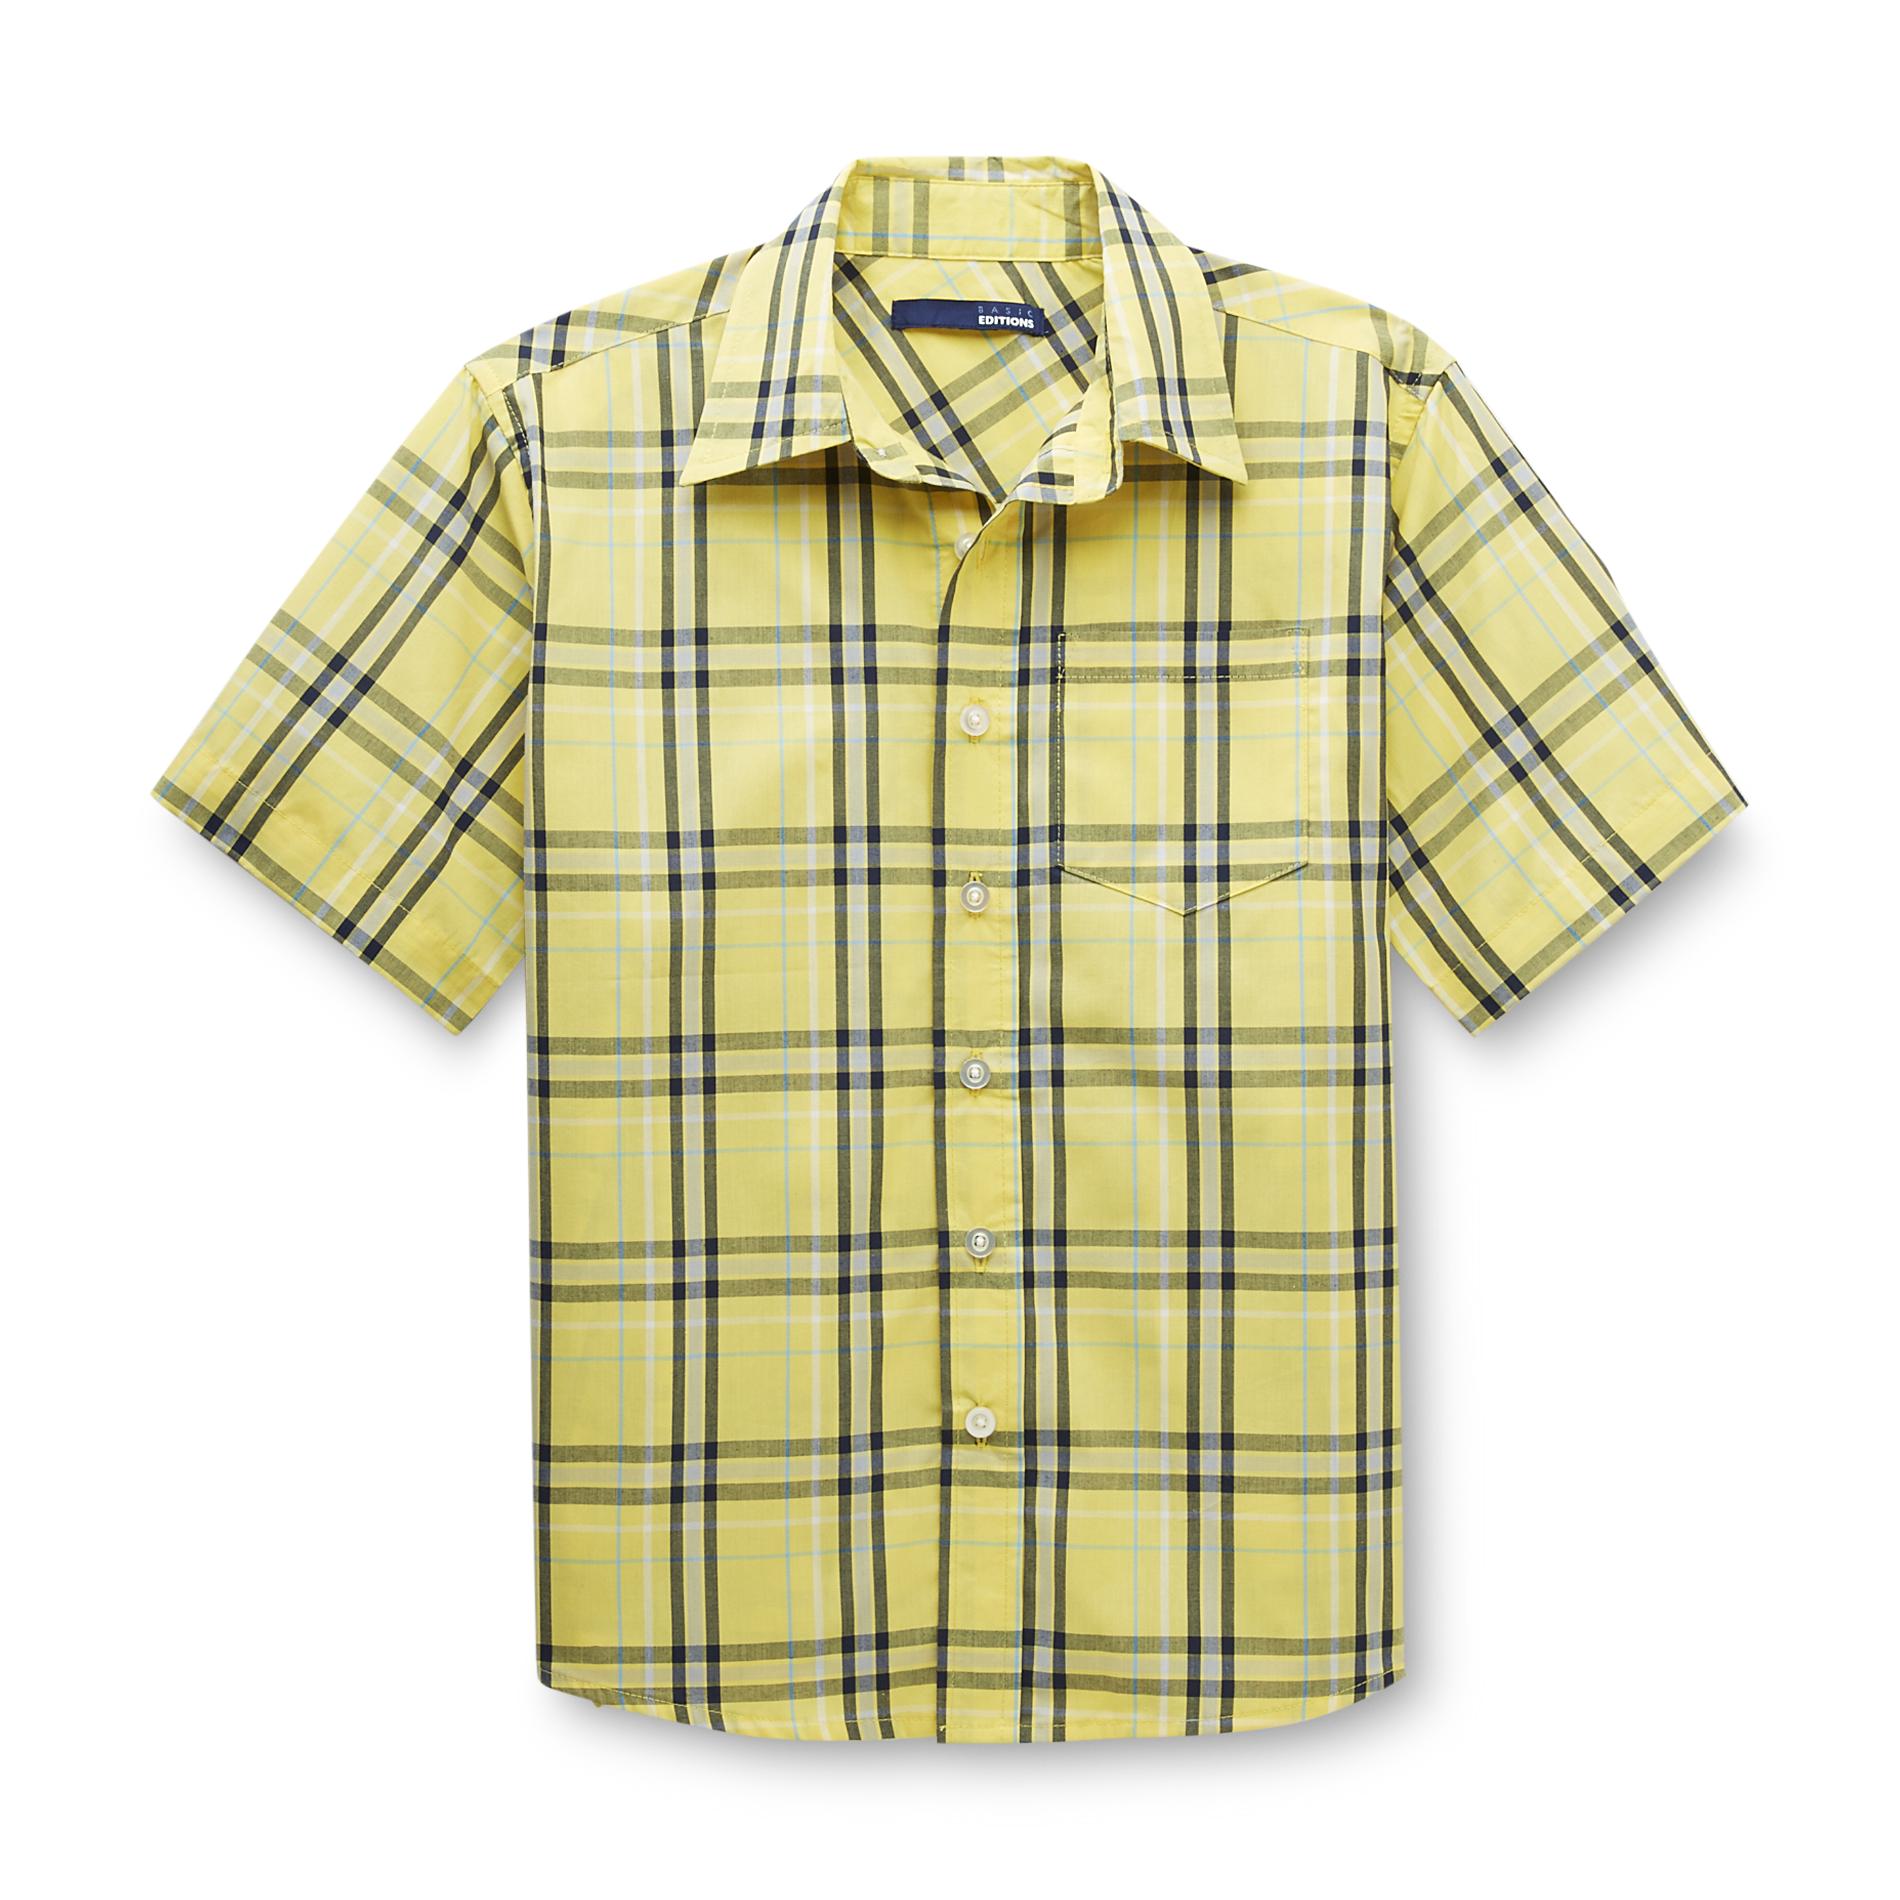 Basic Editions Boy's Woven Short-Sleeve Shirt - Plaid